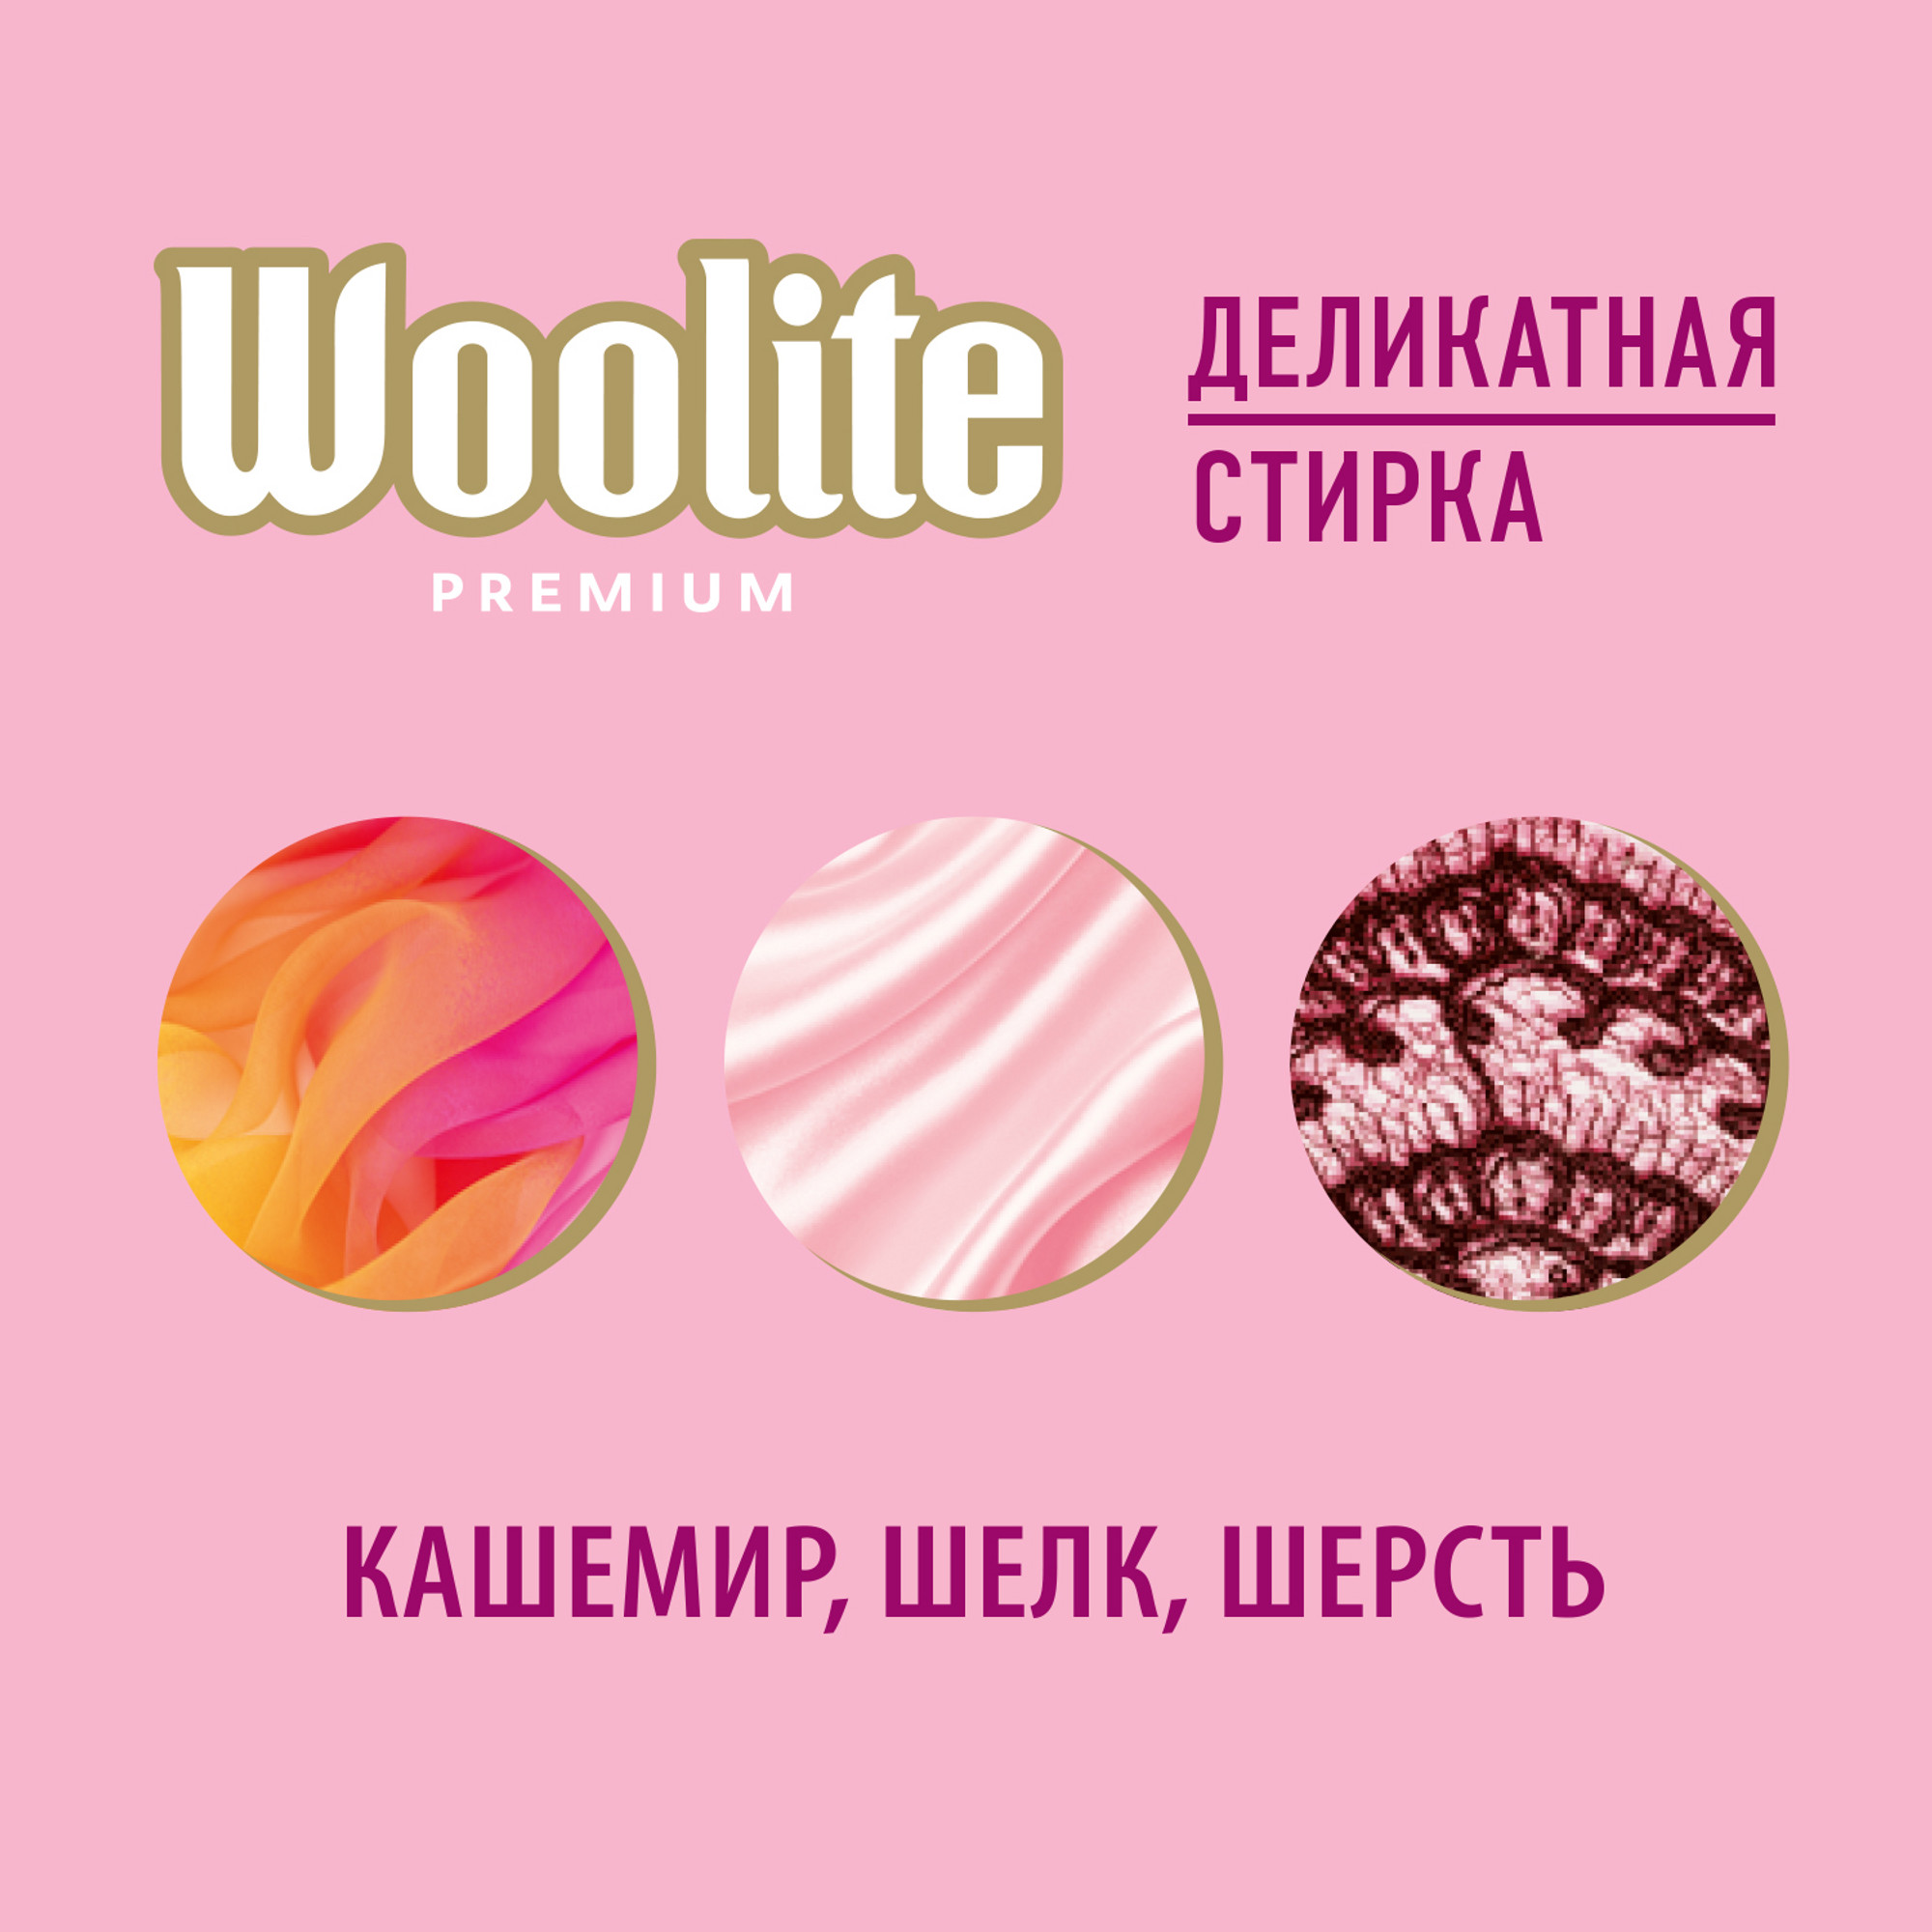 Гель для стирки Woolite Premium Delicate 900 мл - фото 5